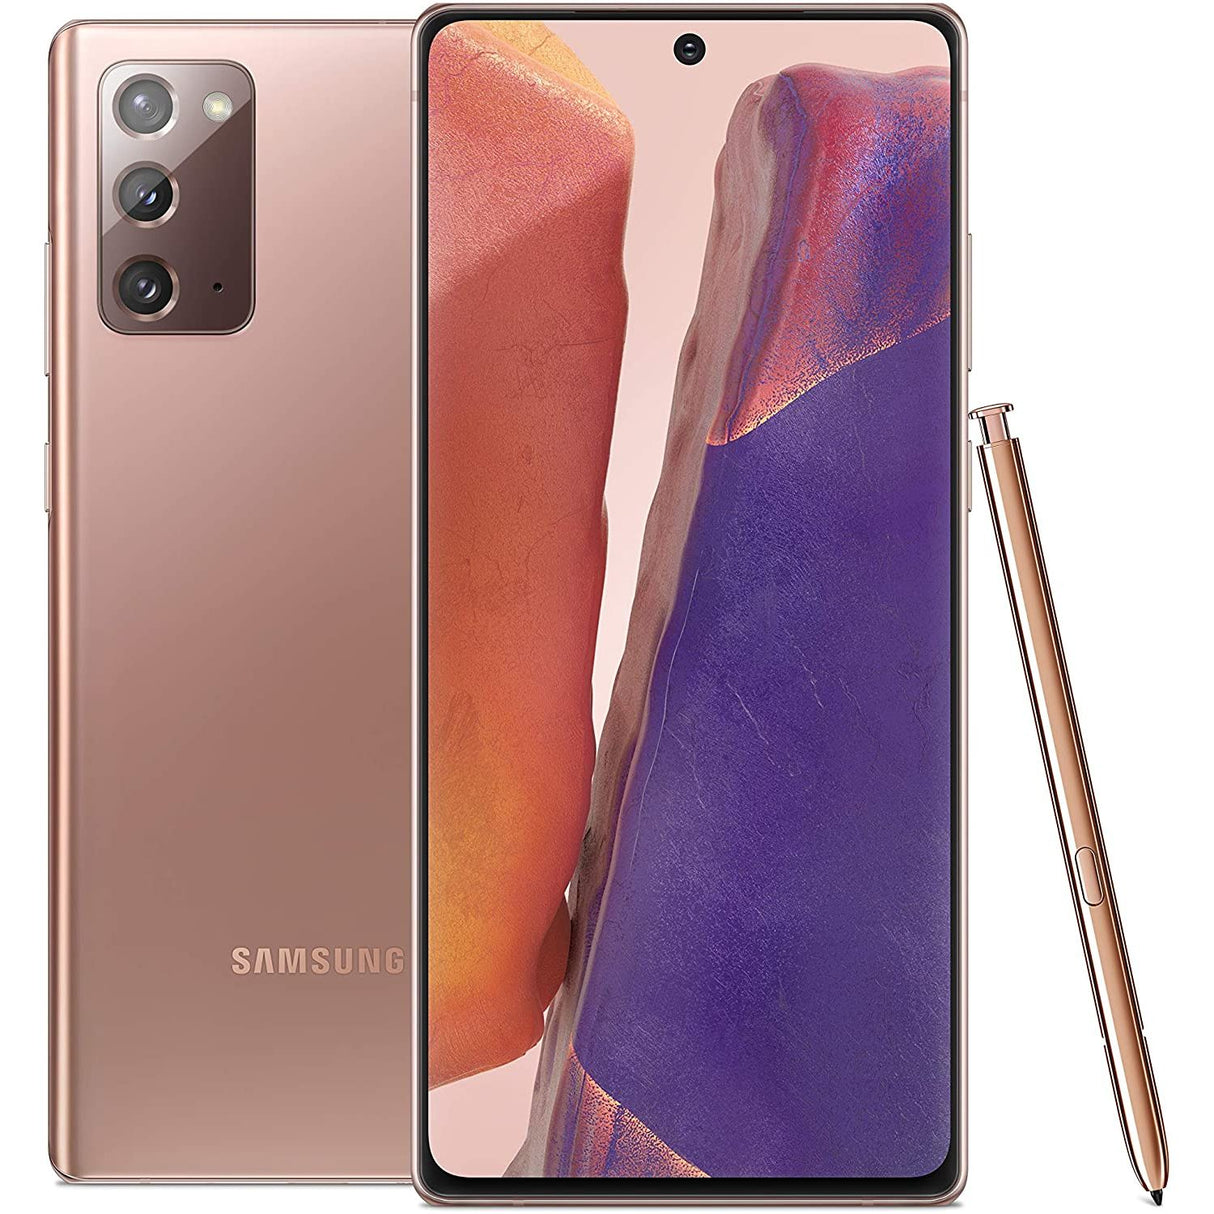 Samsung Galaxy Note20 5G - 128 GB - Mystic Bronze - T-Mobile